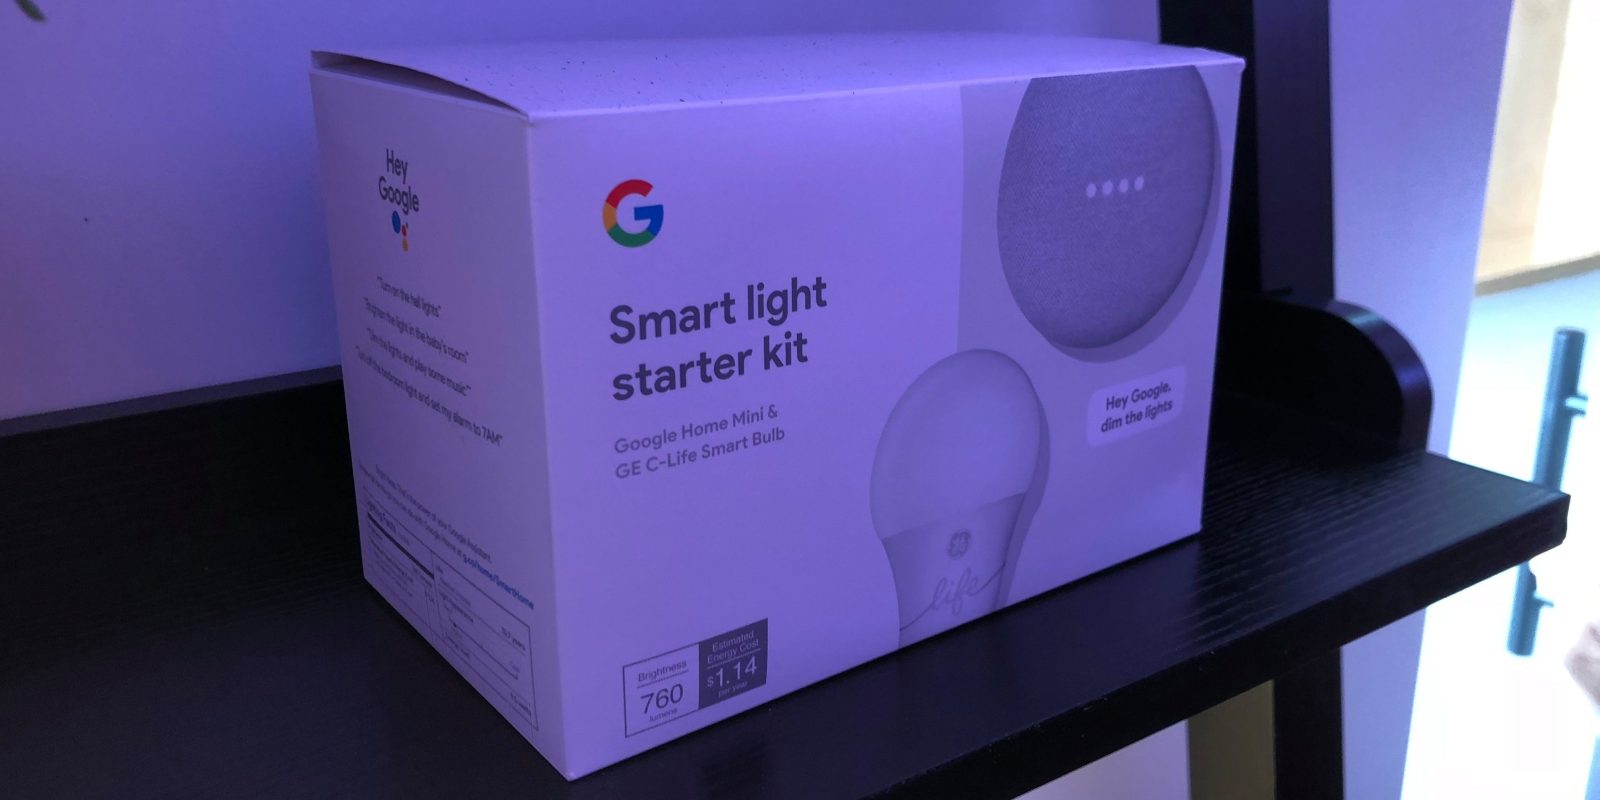 C by GE bulb and Google Home Mini